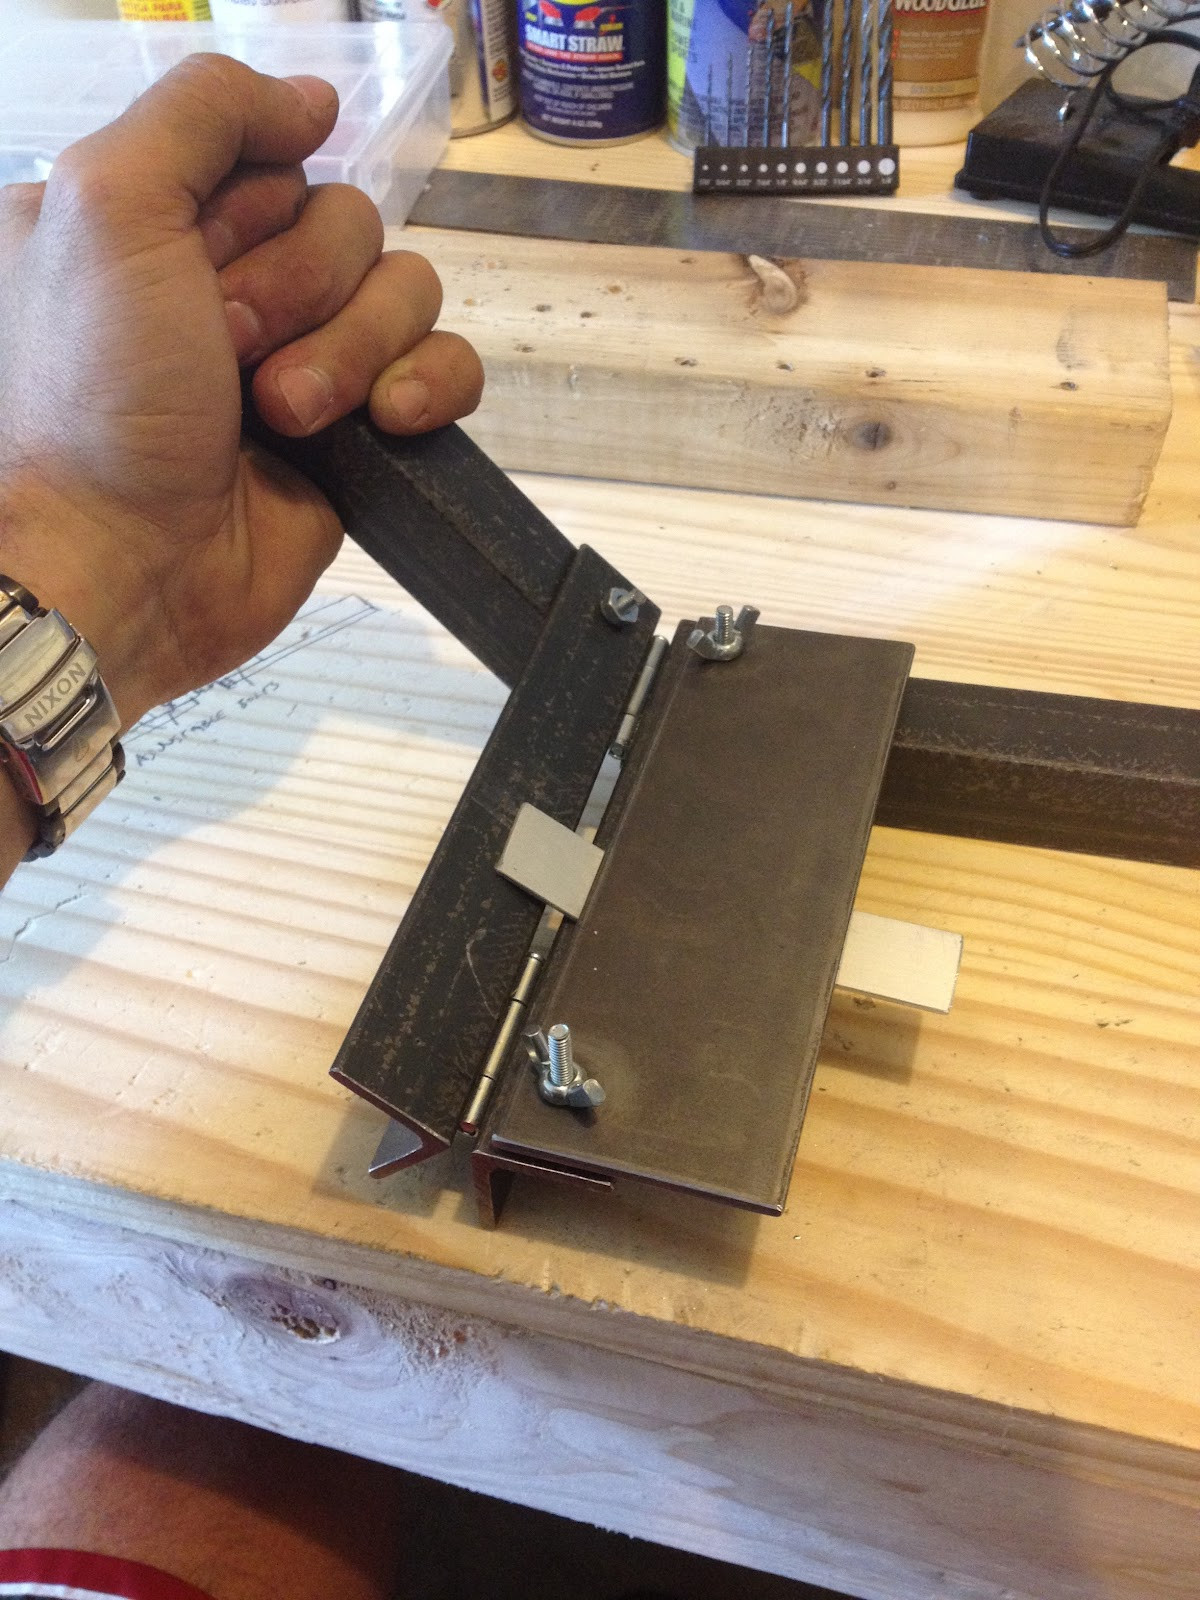 Best ideas about DIY Sheet Metal Brake
. Save or Pin Somewhere in the boundary layer DIY Metal Brake Now.